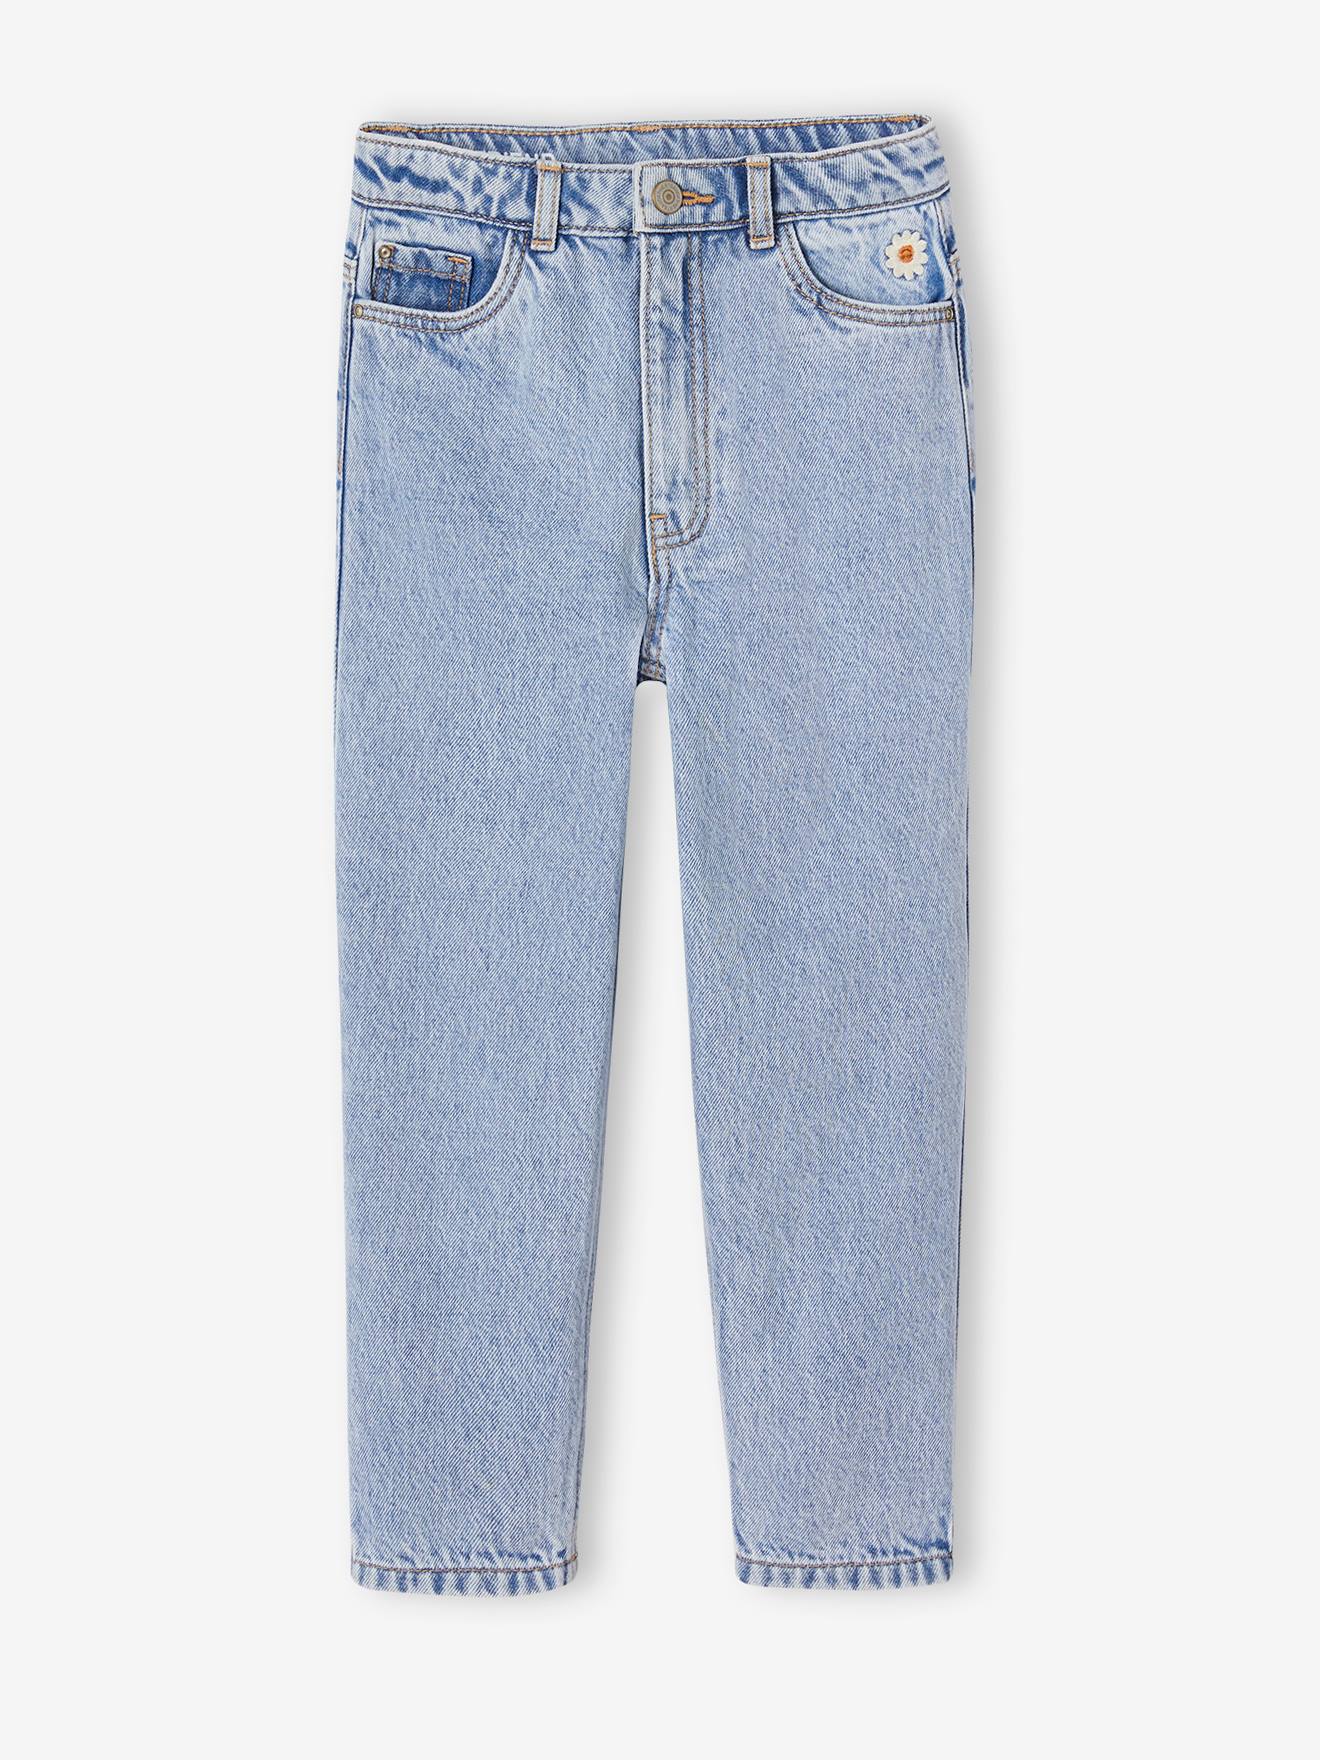 Buy Women's Y2K Fashion Wide Leg High Waist Denim Pants Boyfriend Jeans  Loose Fit Vintage Jeans for Teen Girls at Amazon.in